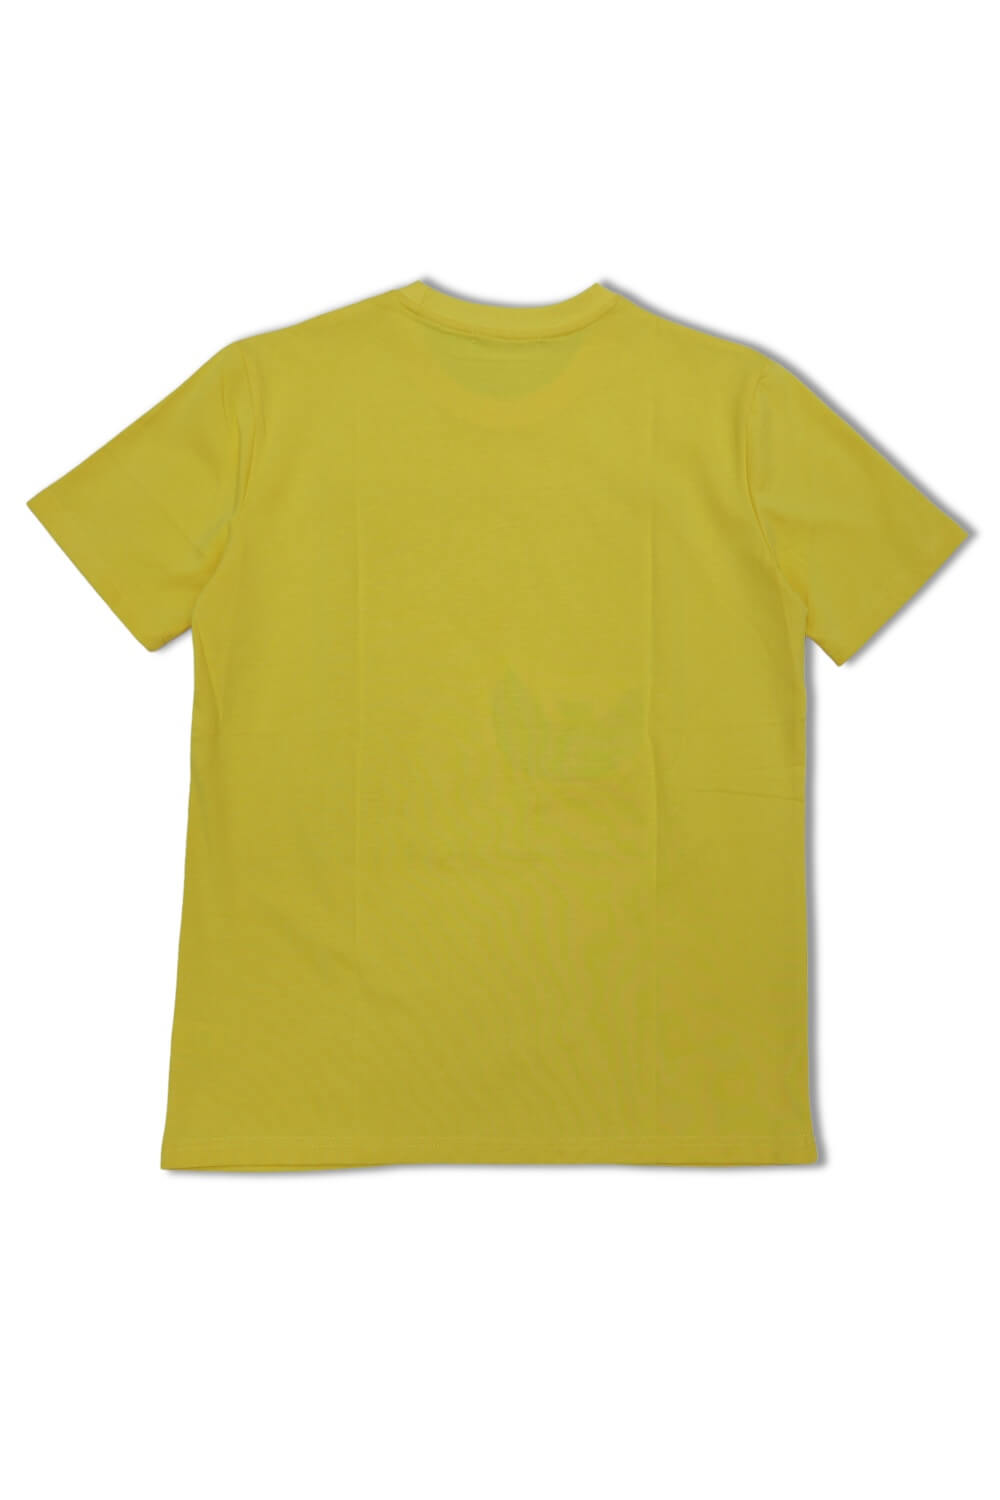 Black Planet- Nipsey Hussle and Kobe T-shirt- Yellow